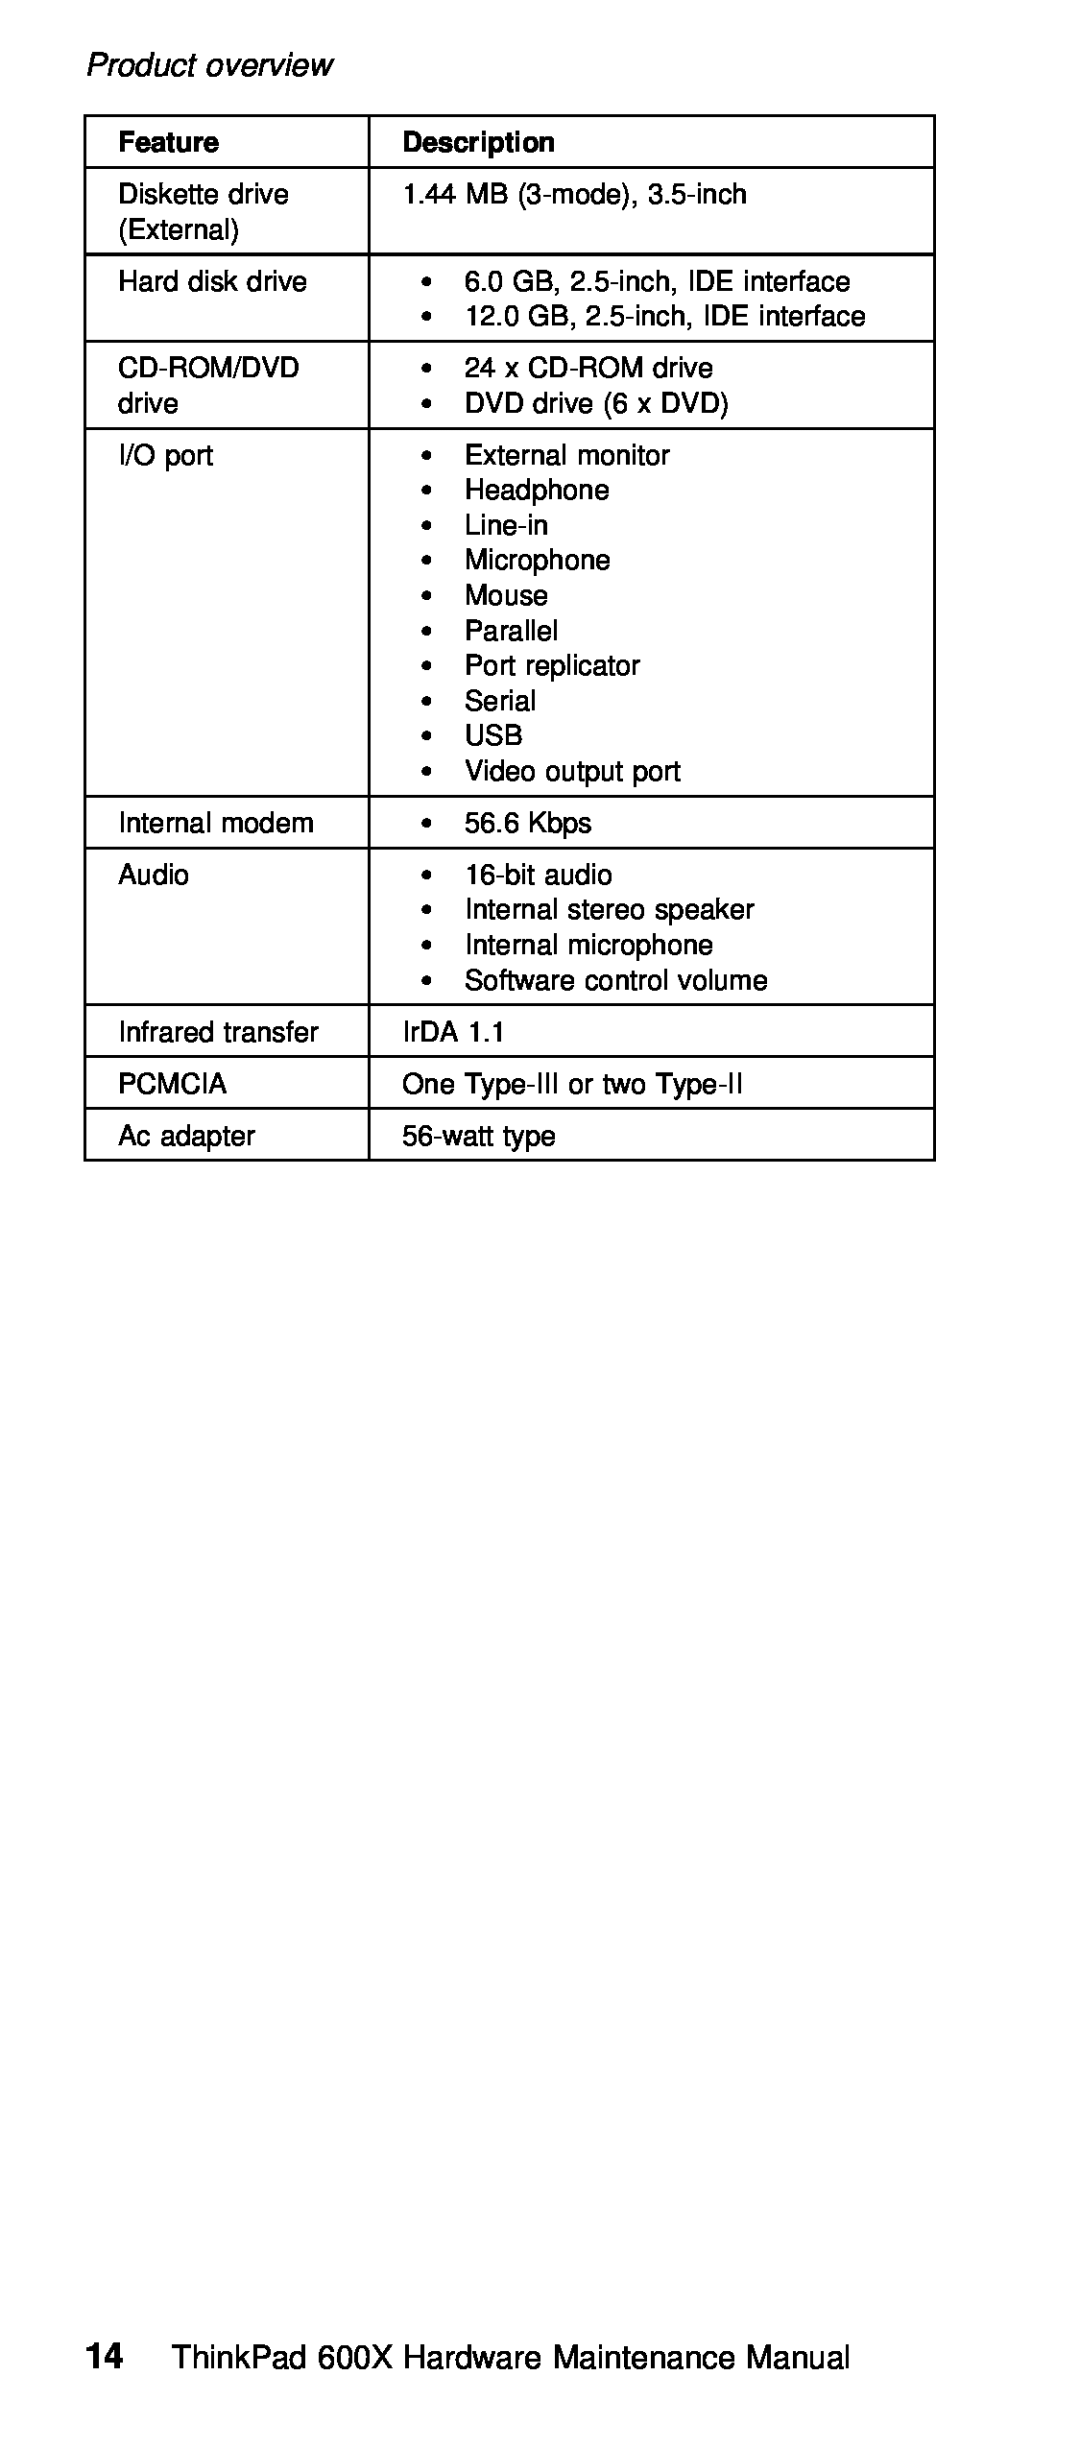 IBM 600X (MT 2646) manual Product, overview, ThinkPad 600X Hardware Maintenance Manual 